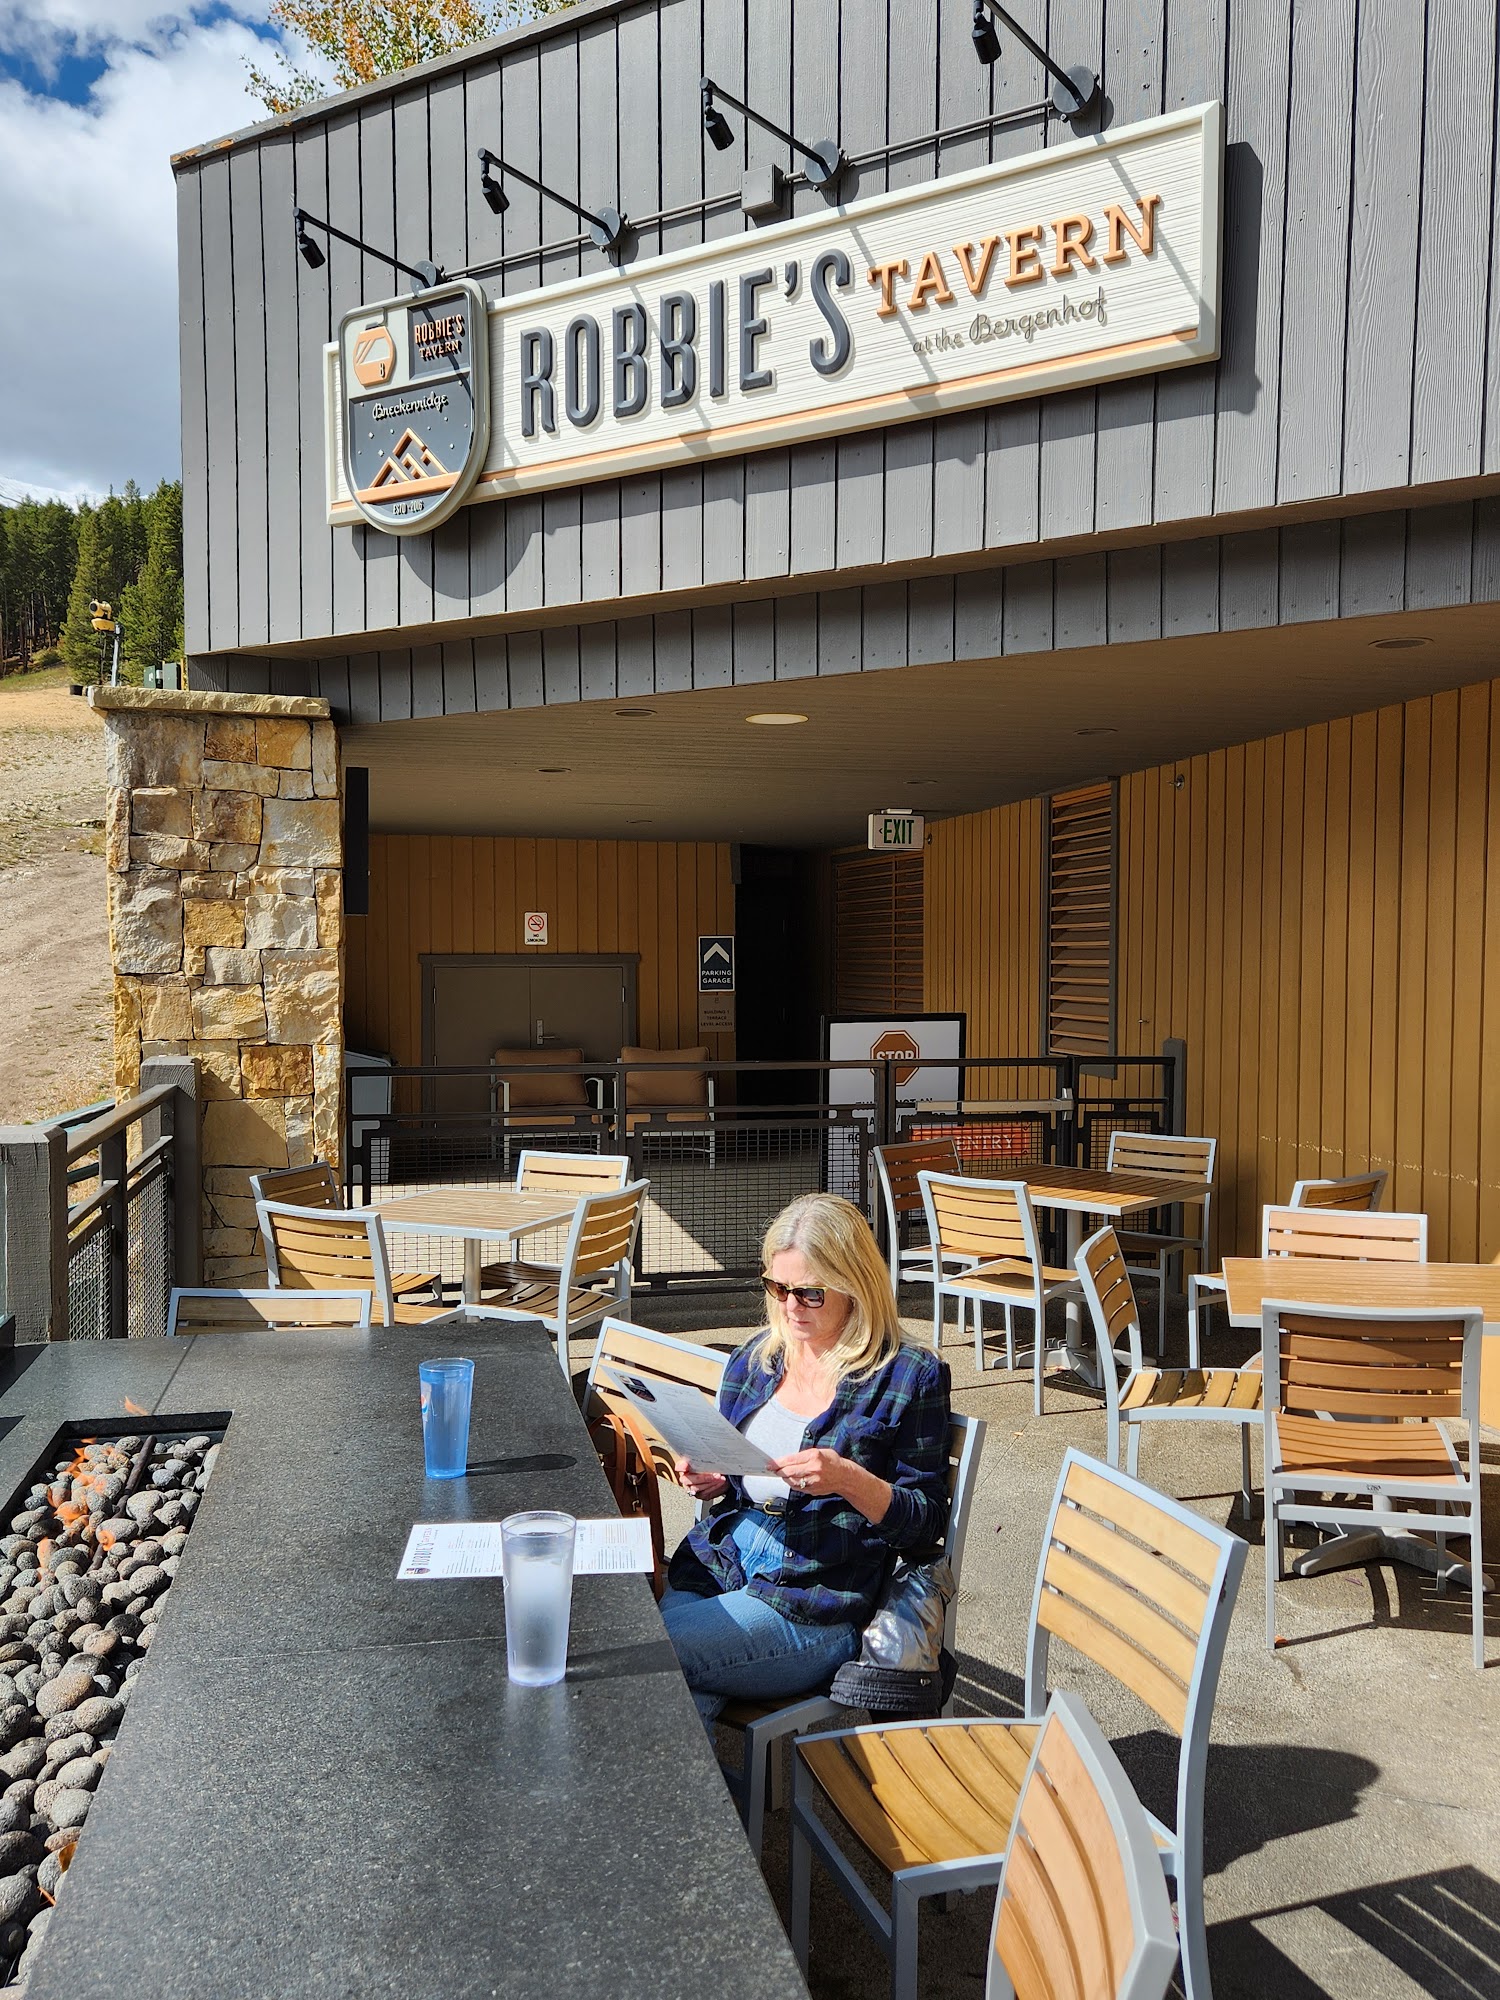 Robbie's Tavern